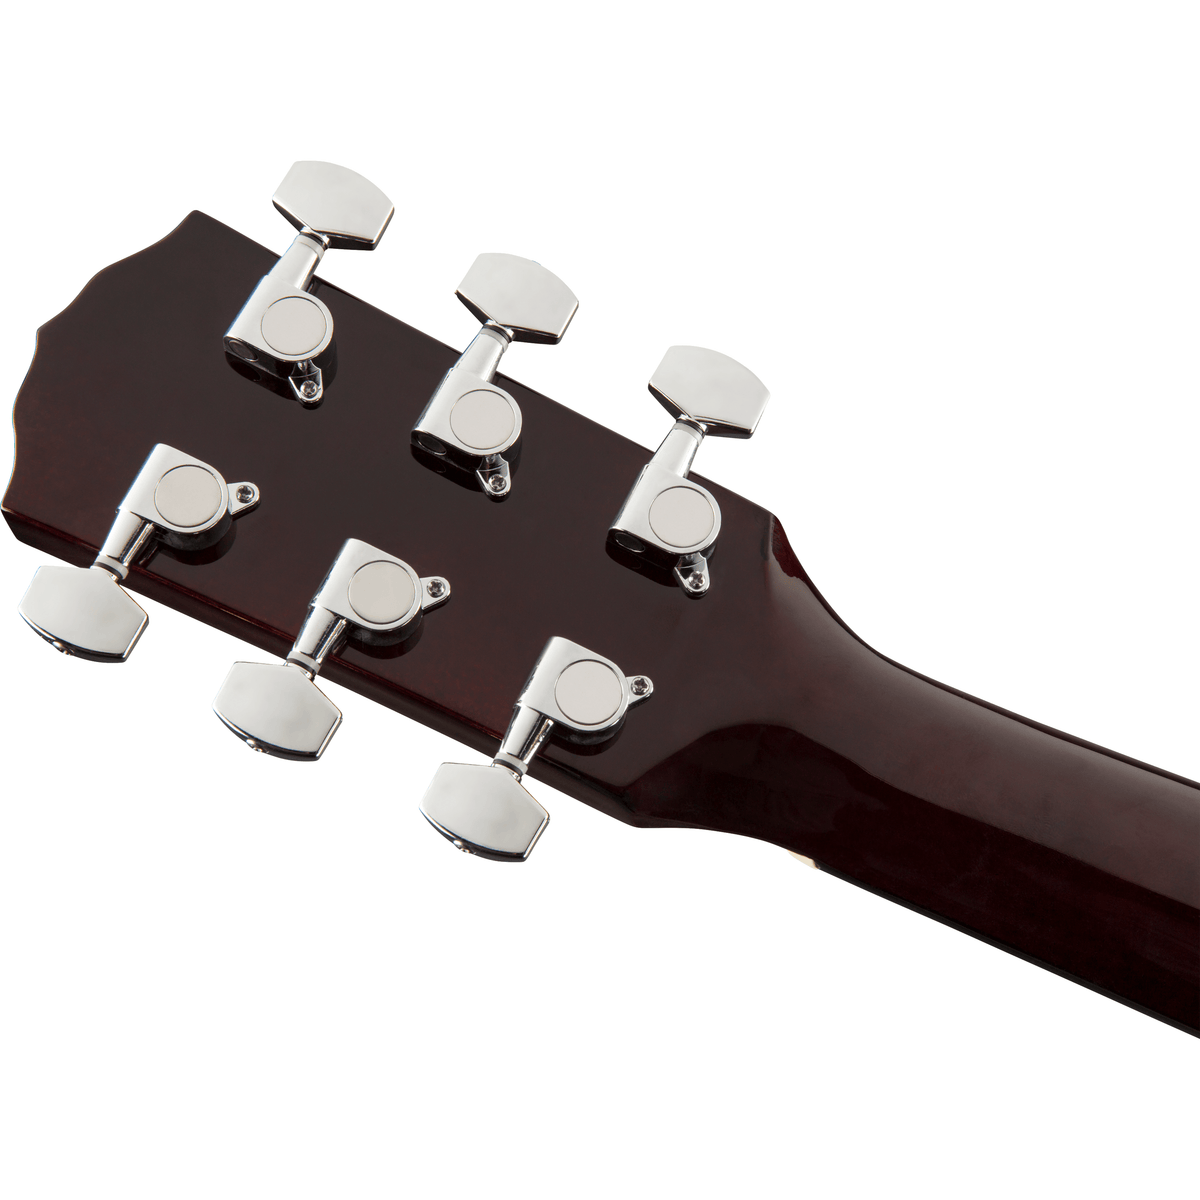 Fender Guitar Fender FA-115 Acoustic Guitar Pack Natural - Byron Music